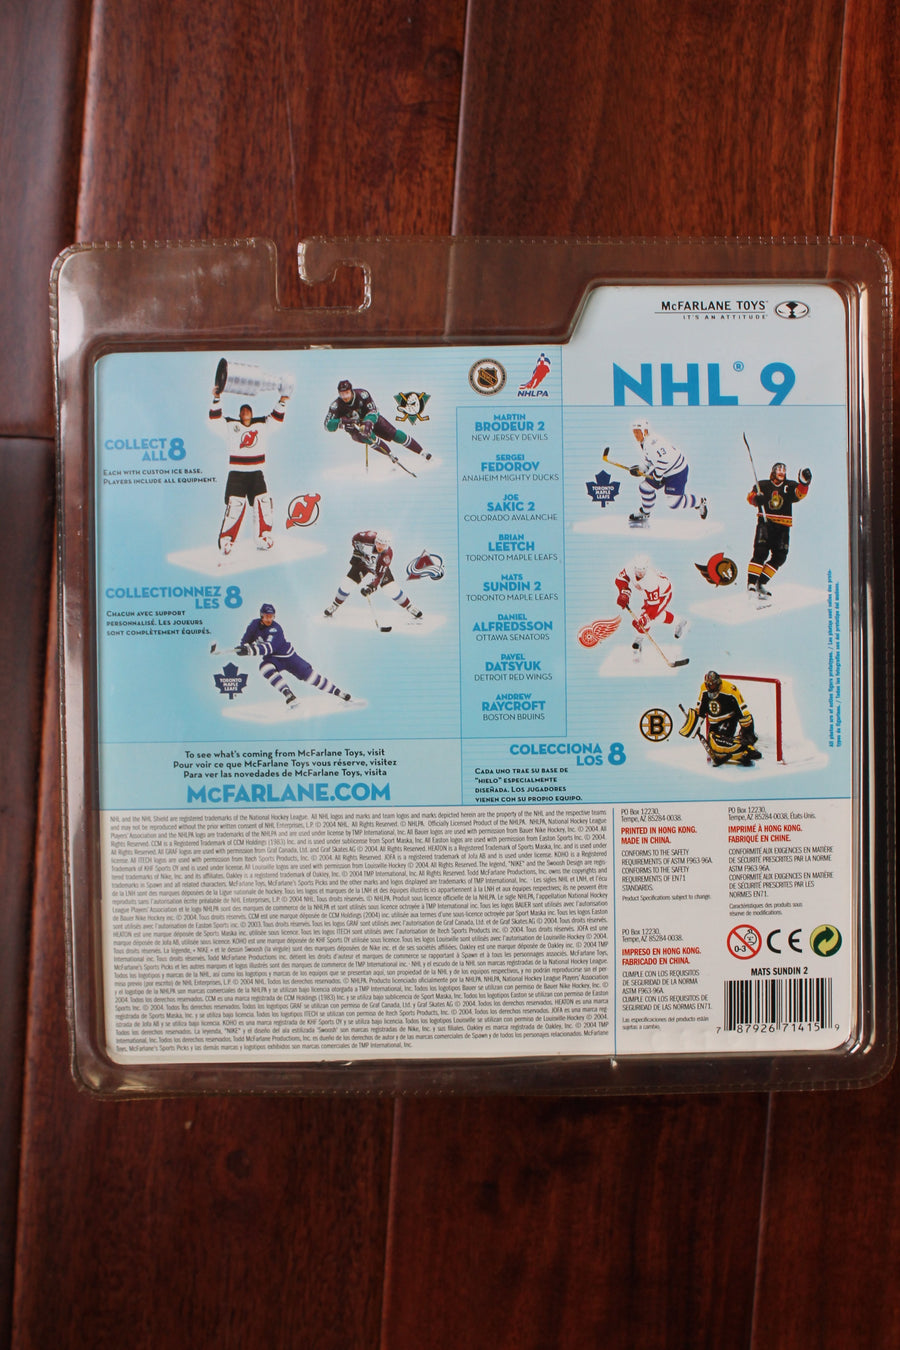 2004 Mcfarlane NHL Mats Sundin 2 Series 9 Toronto Maple